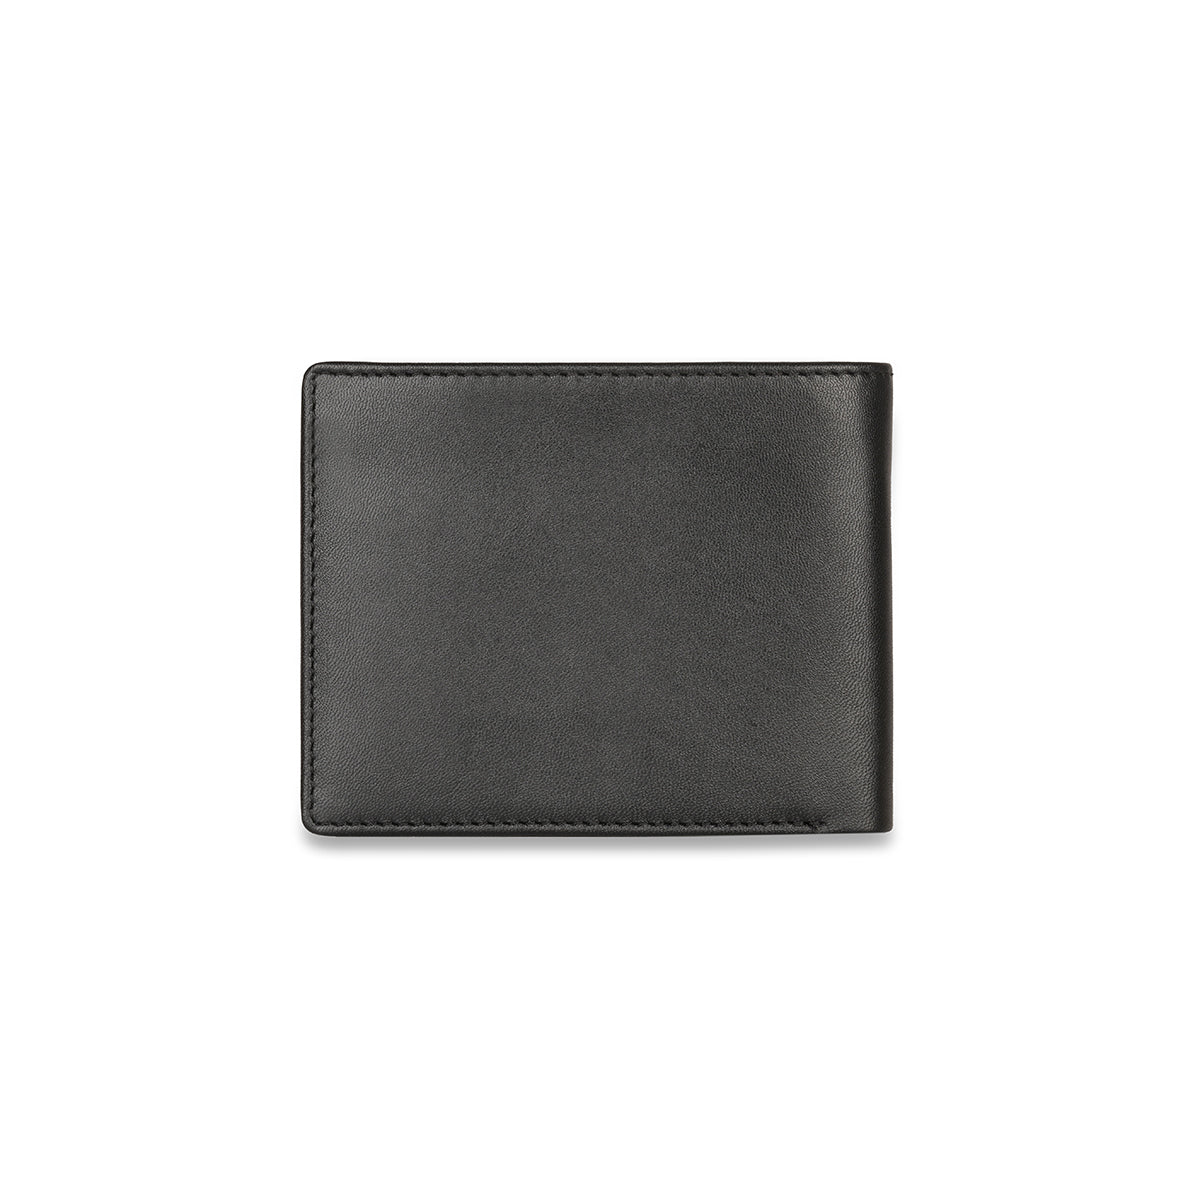 UCB Treviso Men's Leather Passcase Wallet 